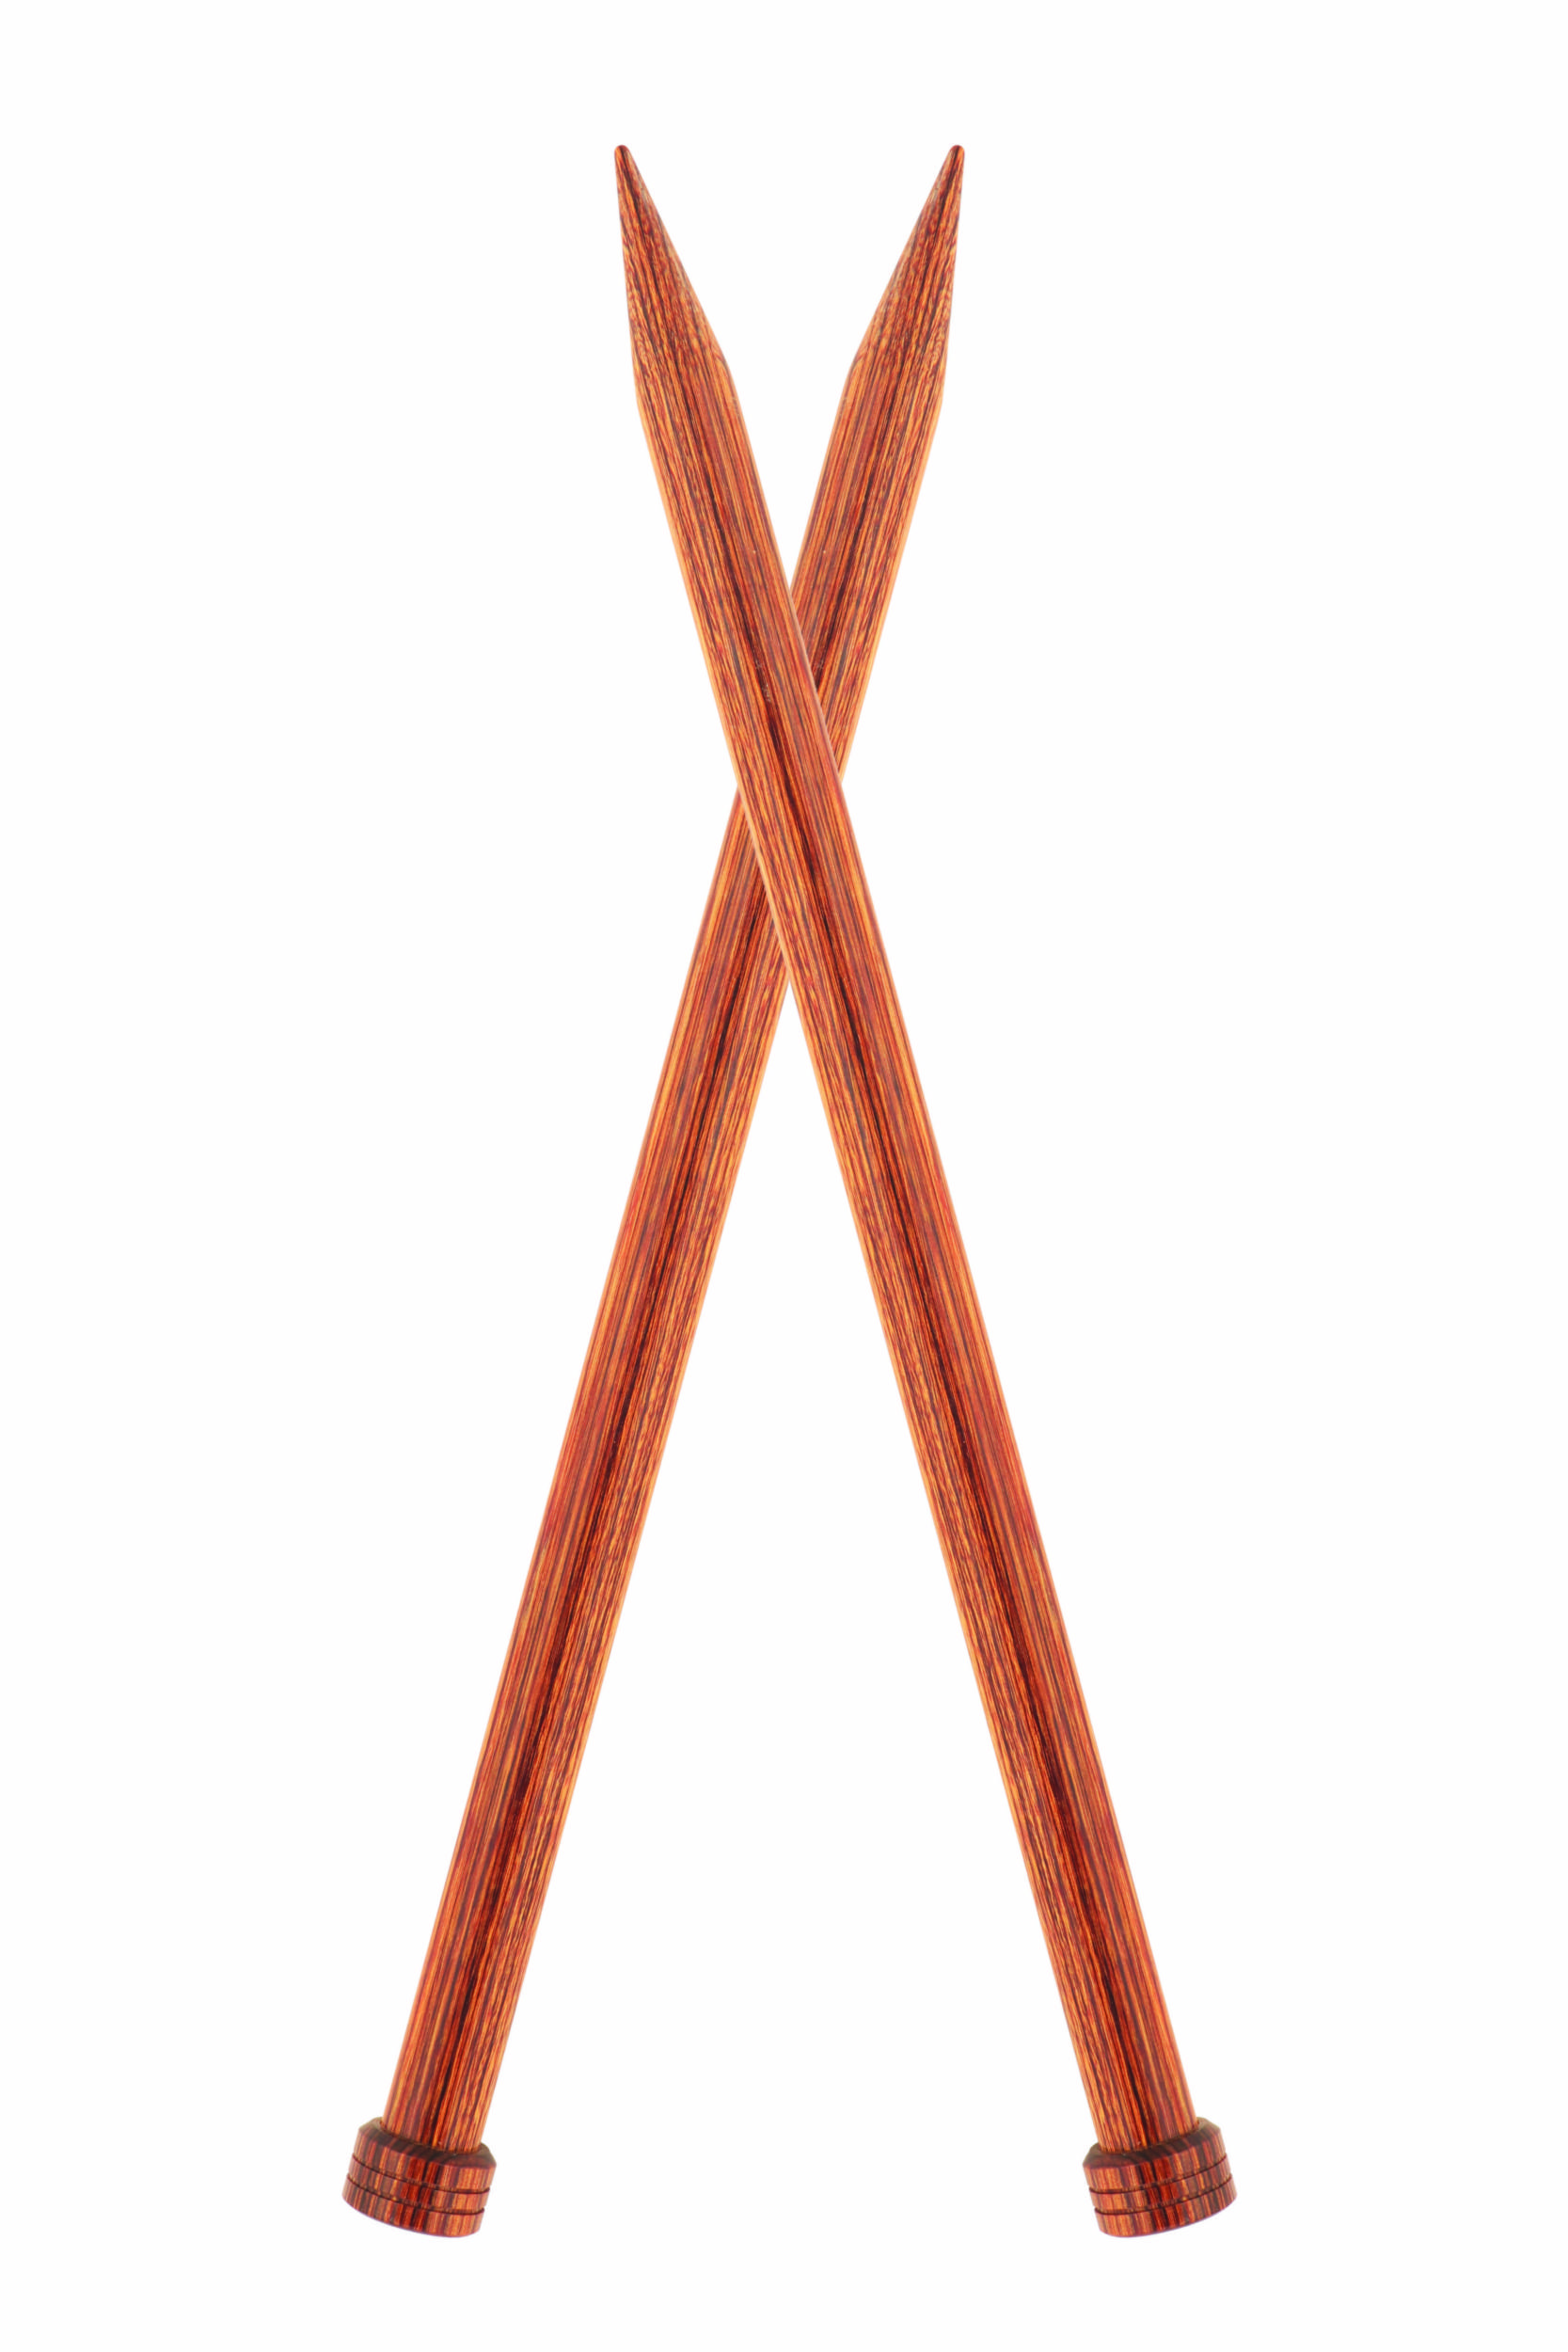 31194 Спиці прямі Ginger KnitPro, 35 см, 10.00 мм